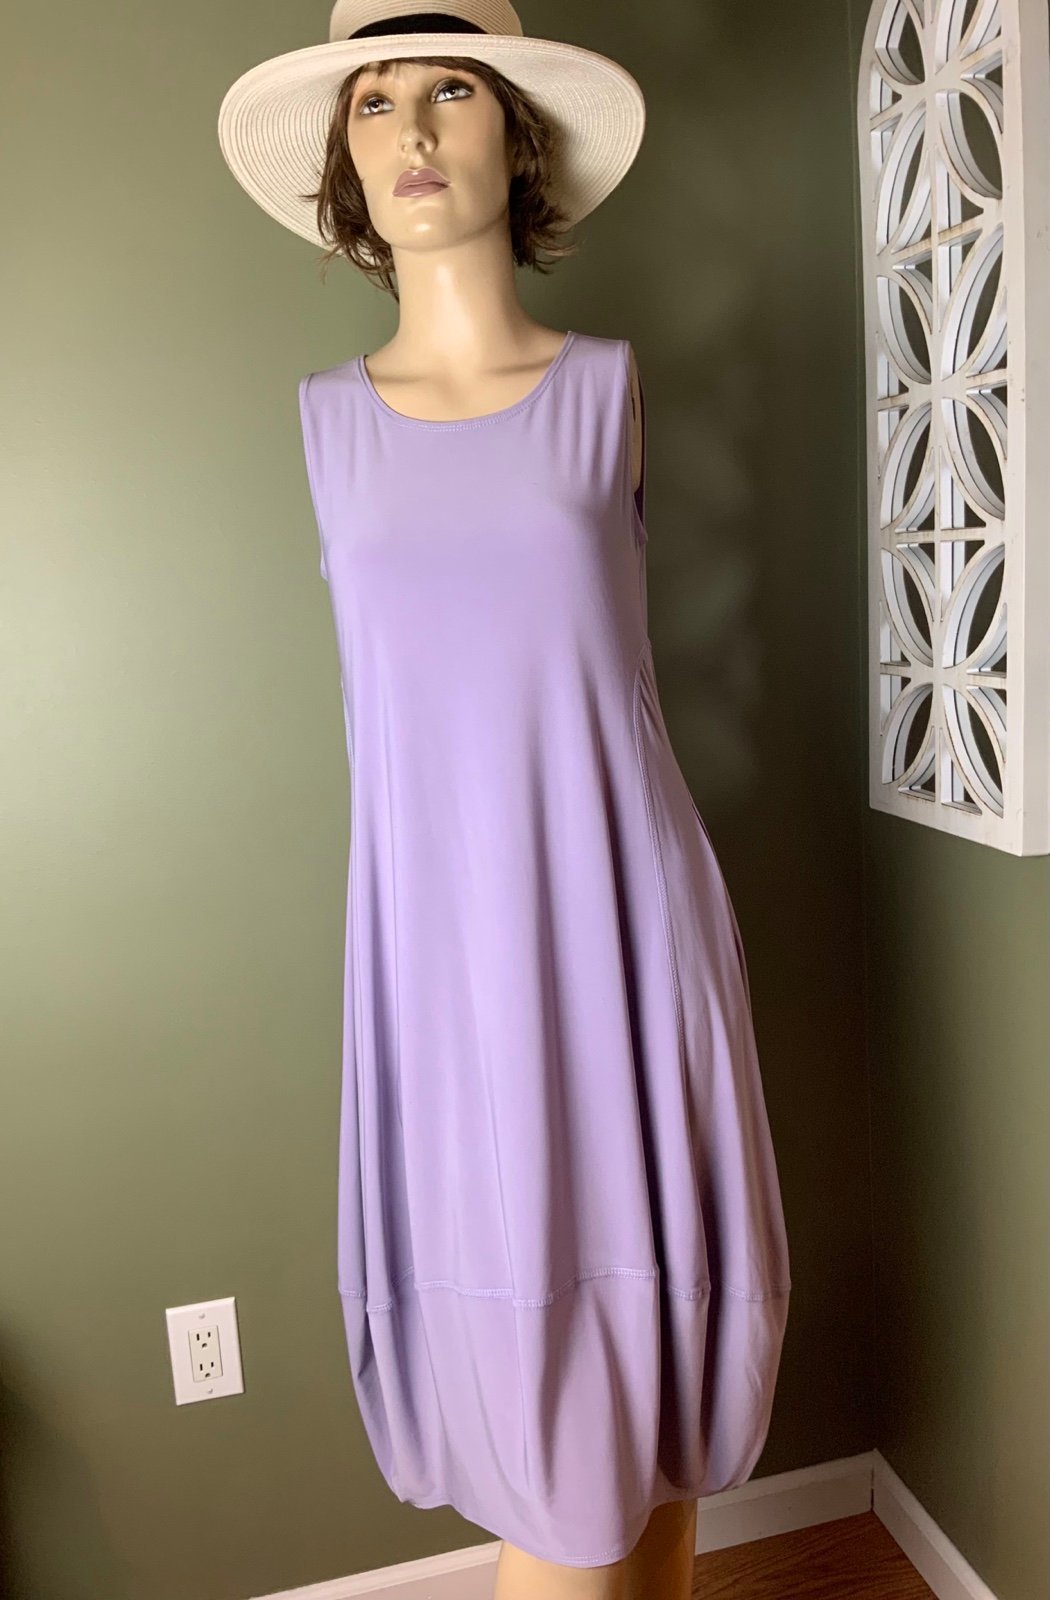 Popular Marla Wynne lavender dress brand new with tags 